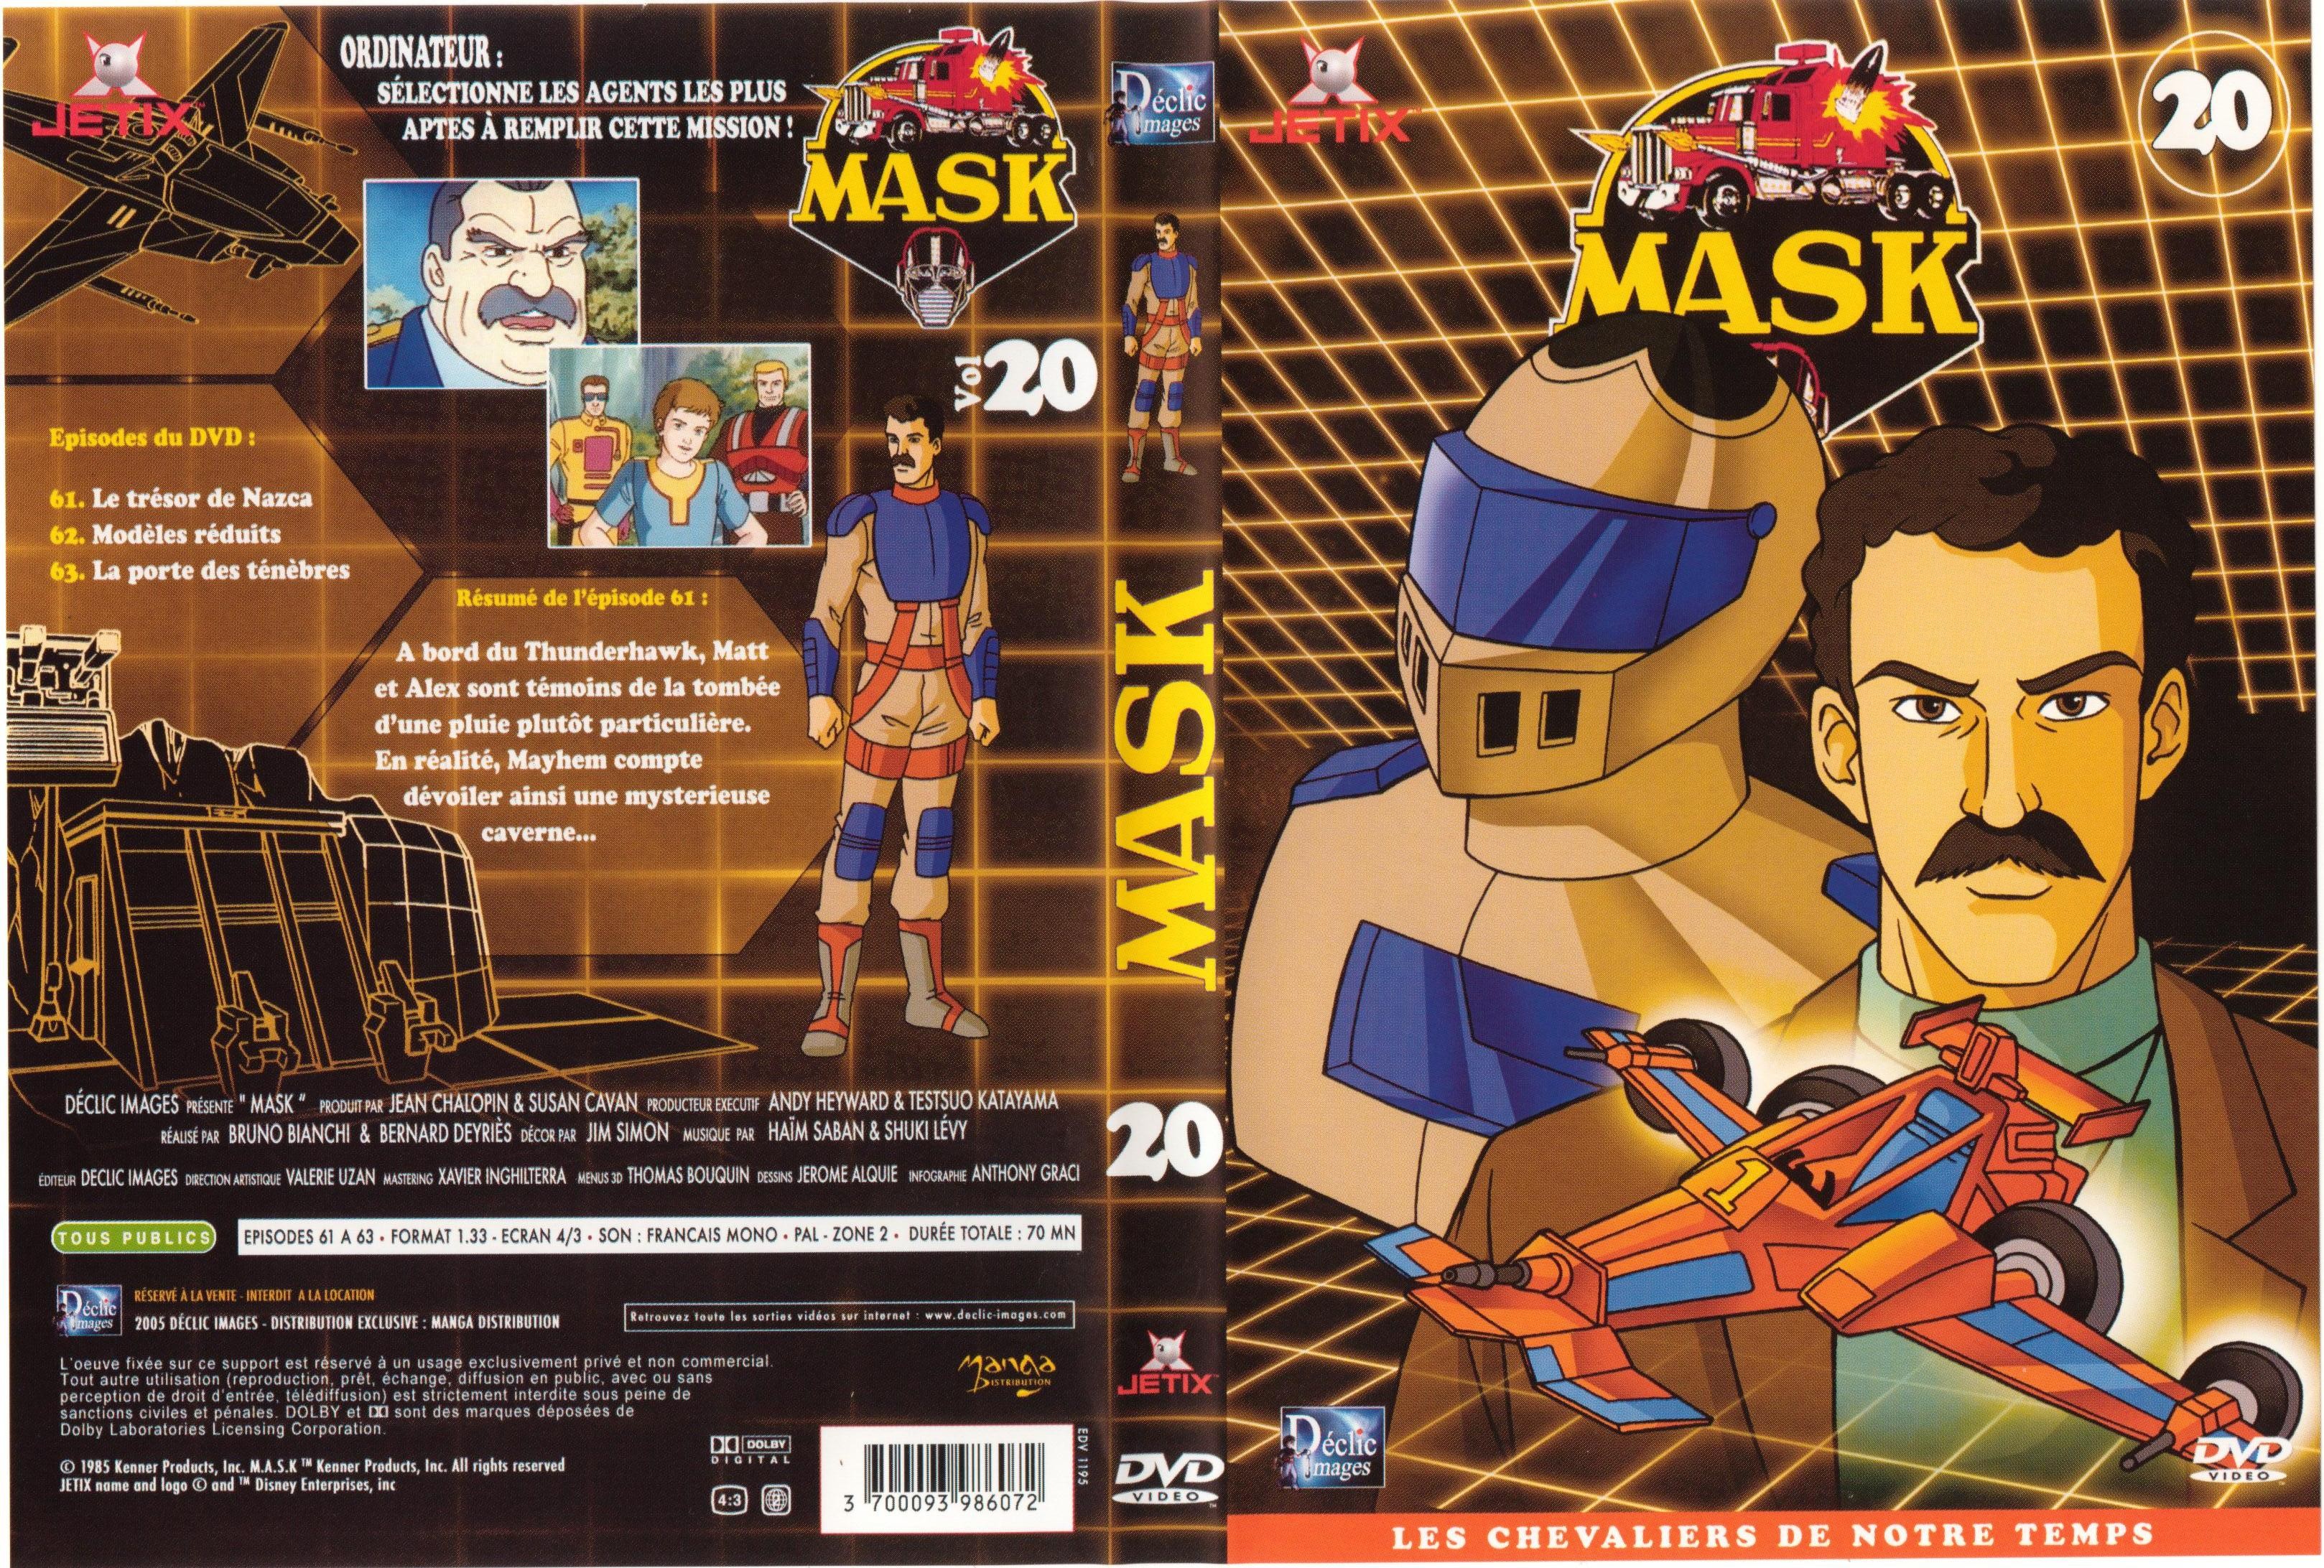 Jaquette DVD Mask vol 20